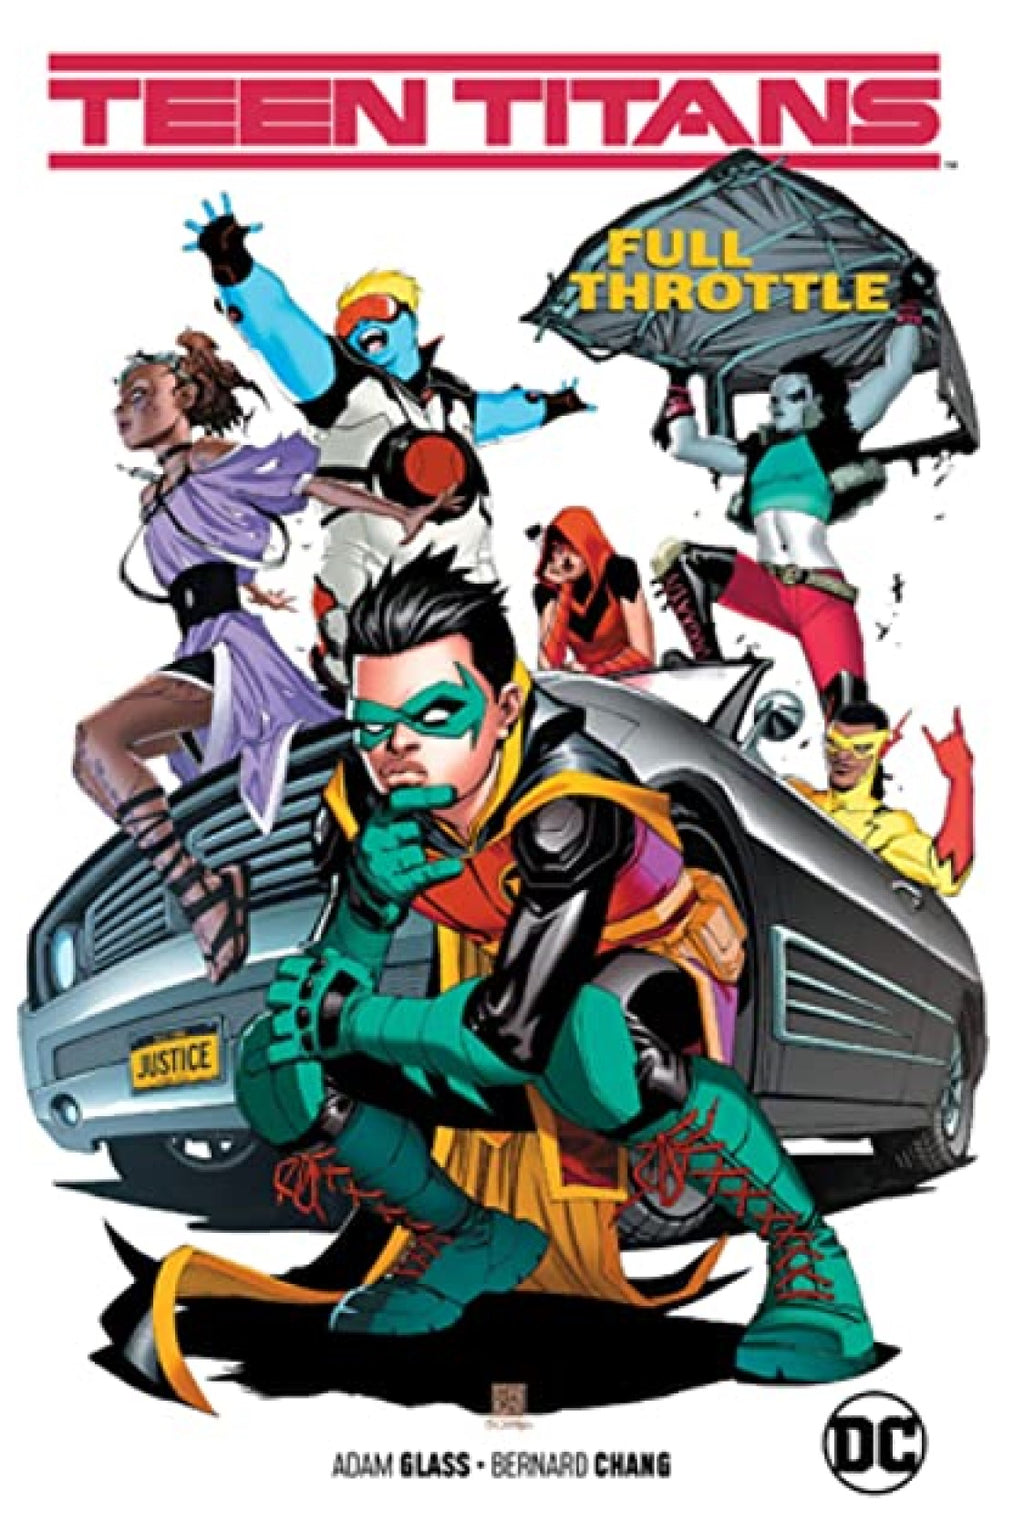 Titans Volume 1 Full Throttle - The Comic Warehouse